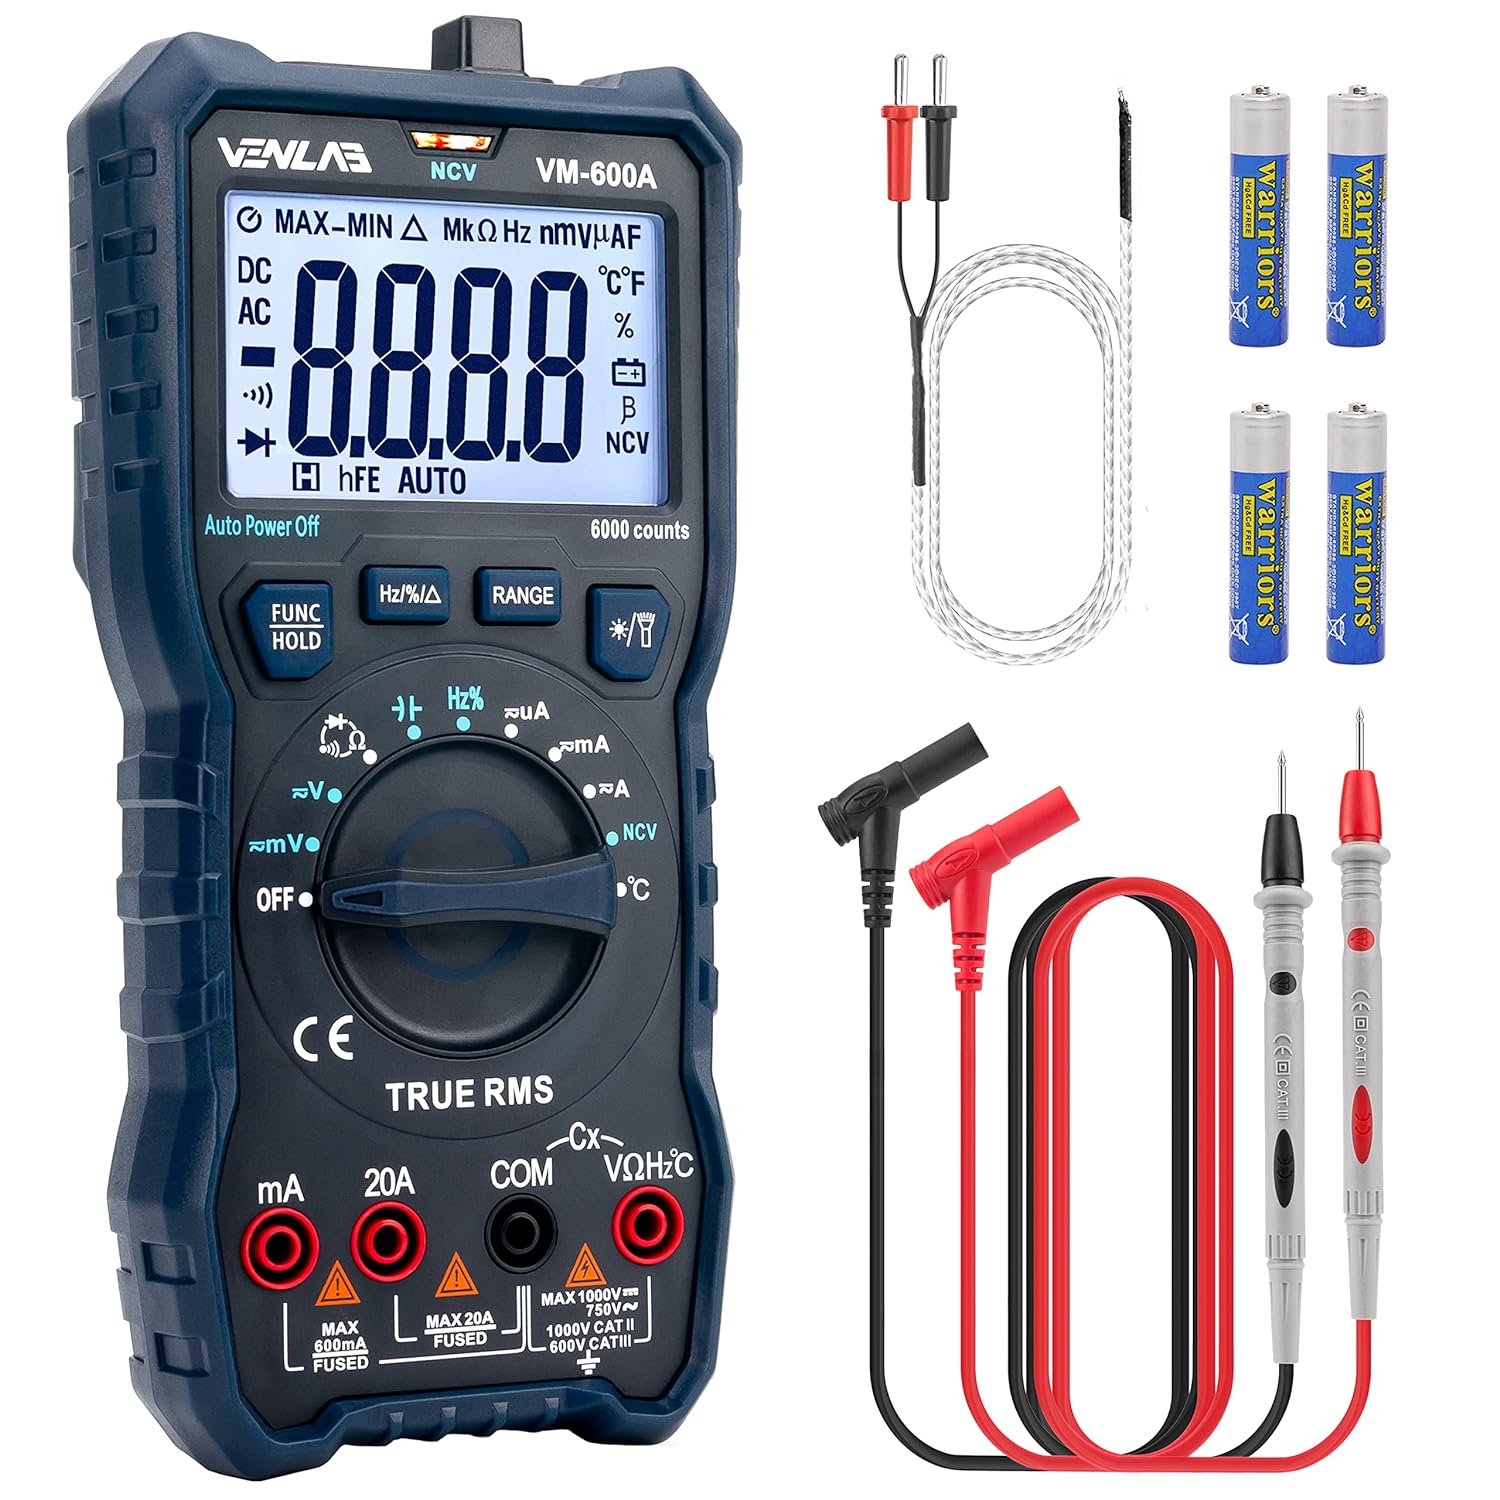 Generic VENLAB Digital Multimeter TRMS 6000 Counts Volt Meter Ohm Amp Tester Auto-Ranging; Accurately Measures Voltage Current Resistan